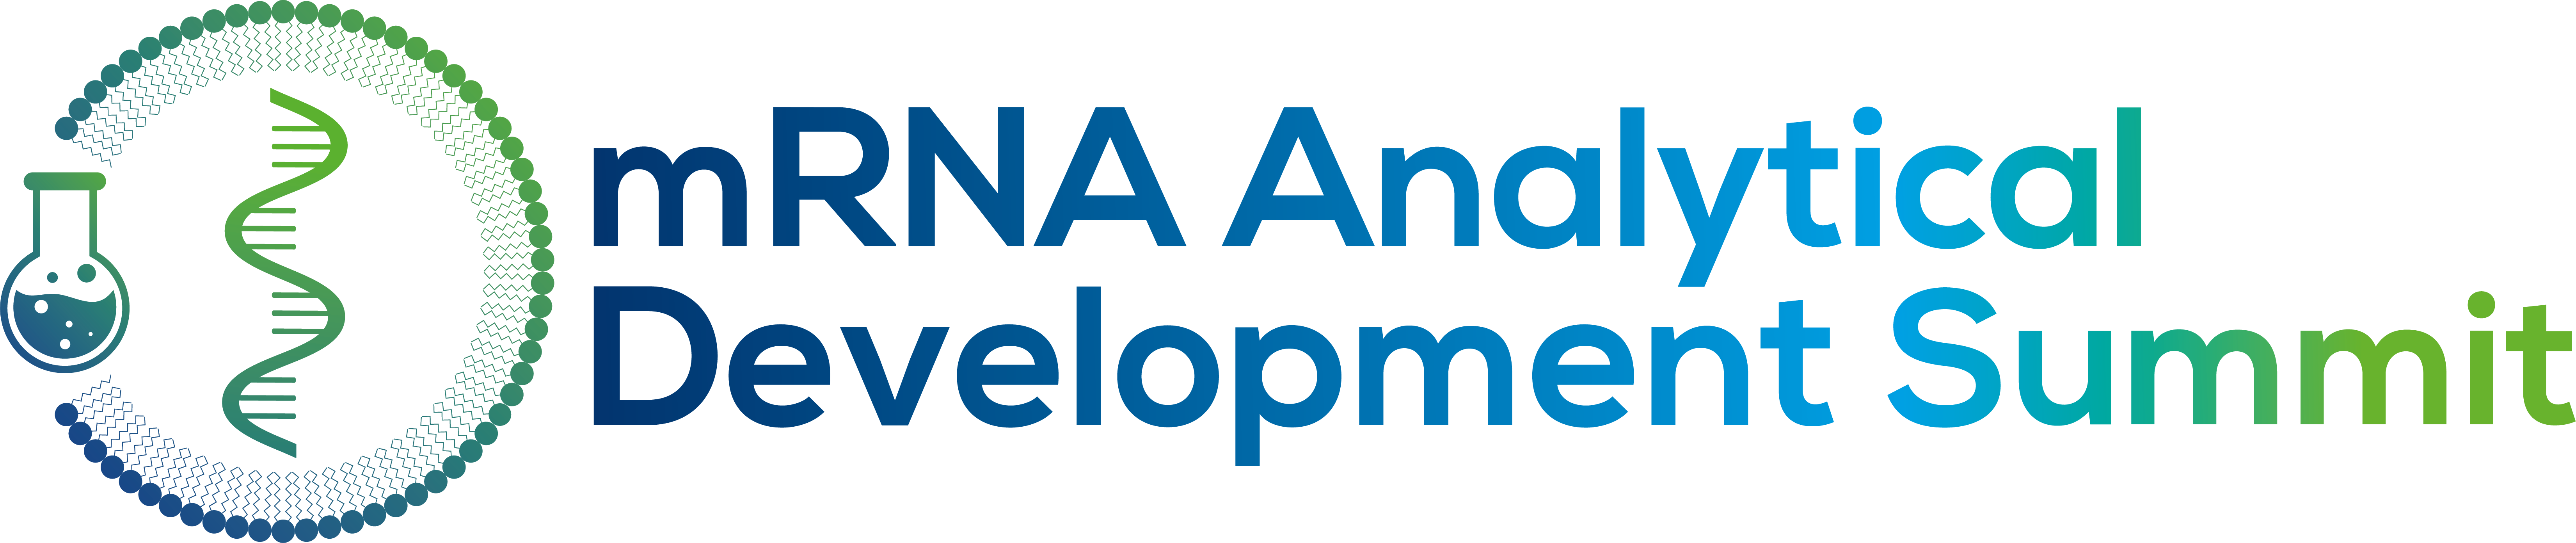 mRNA Analytical Development Summit logo